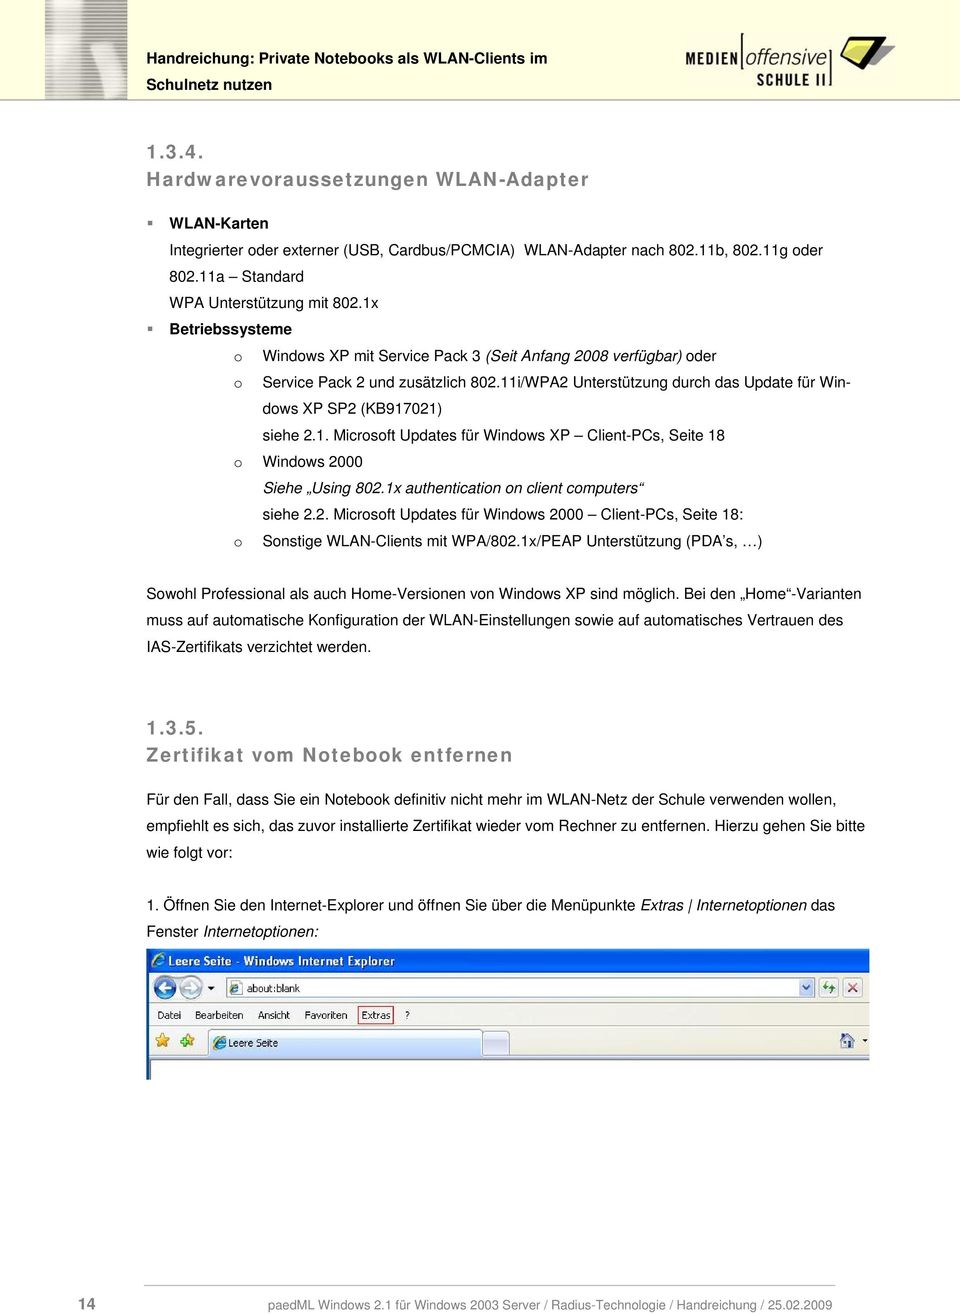 1. Microsoft Updates für Windows XP Client-PCs, Seite 18 o Windows 2000 Siehe Using 802.1x authentication on client computers siehe 2.2. Microsoft Updates für Windows 2000 Client-PCs, Seite 18: o Sonstige WLAN-Clients mit WPA/802.